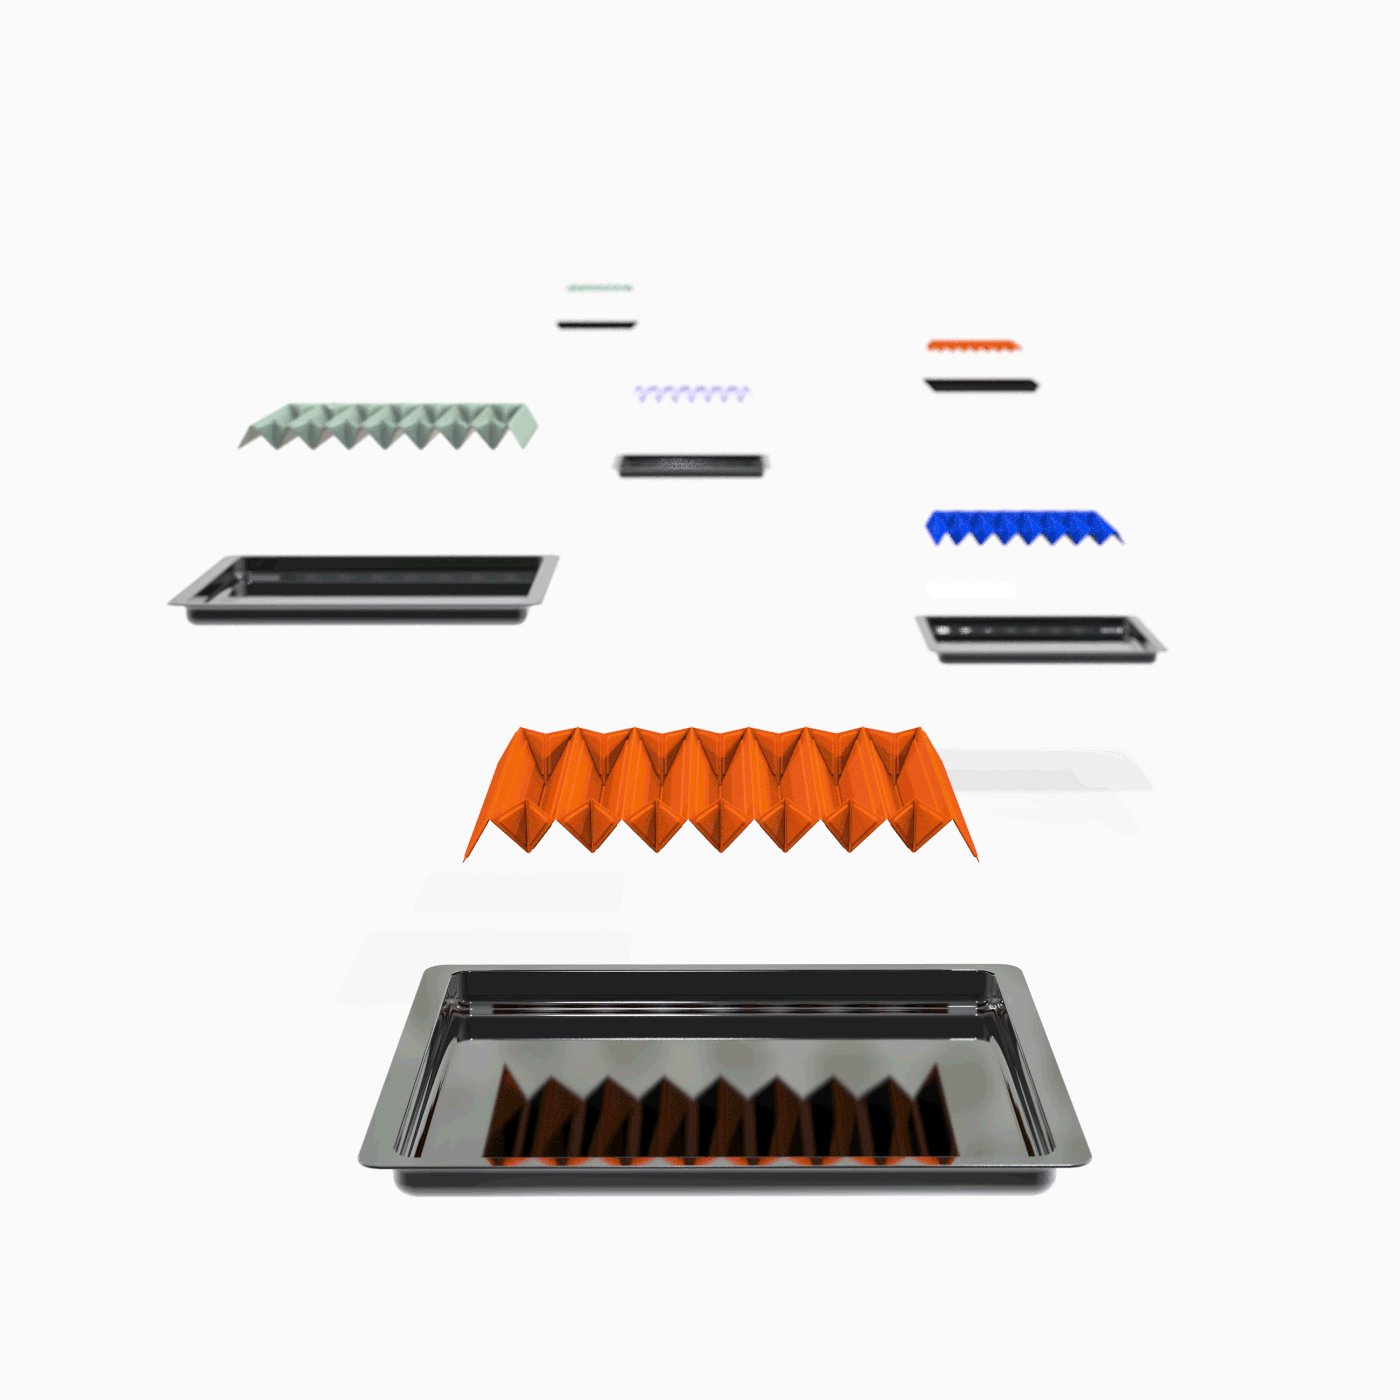 industrial design  product design  Sustainability baking paper keyshot Rhino prototype silicone cooking